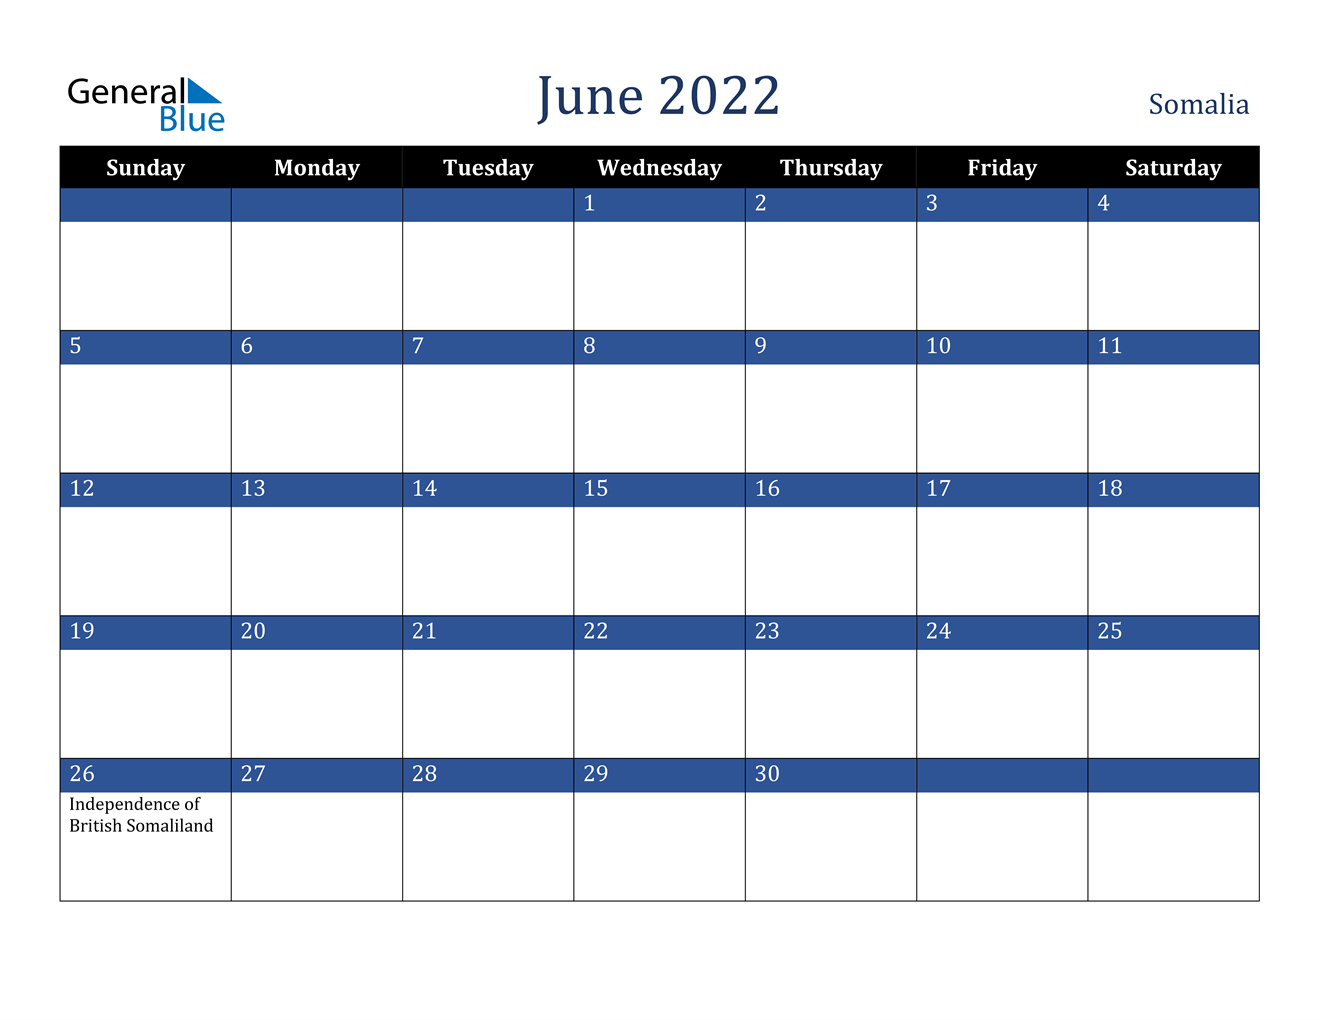 June 2022 Calendar - Somalia